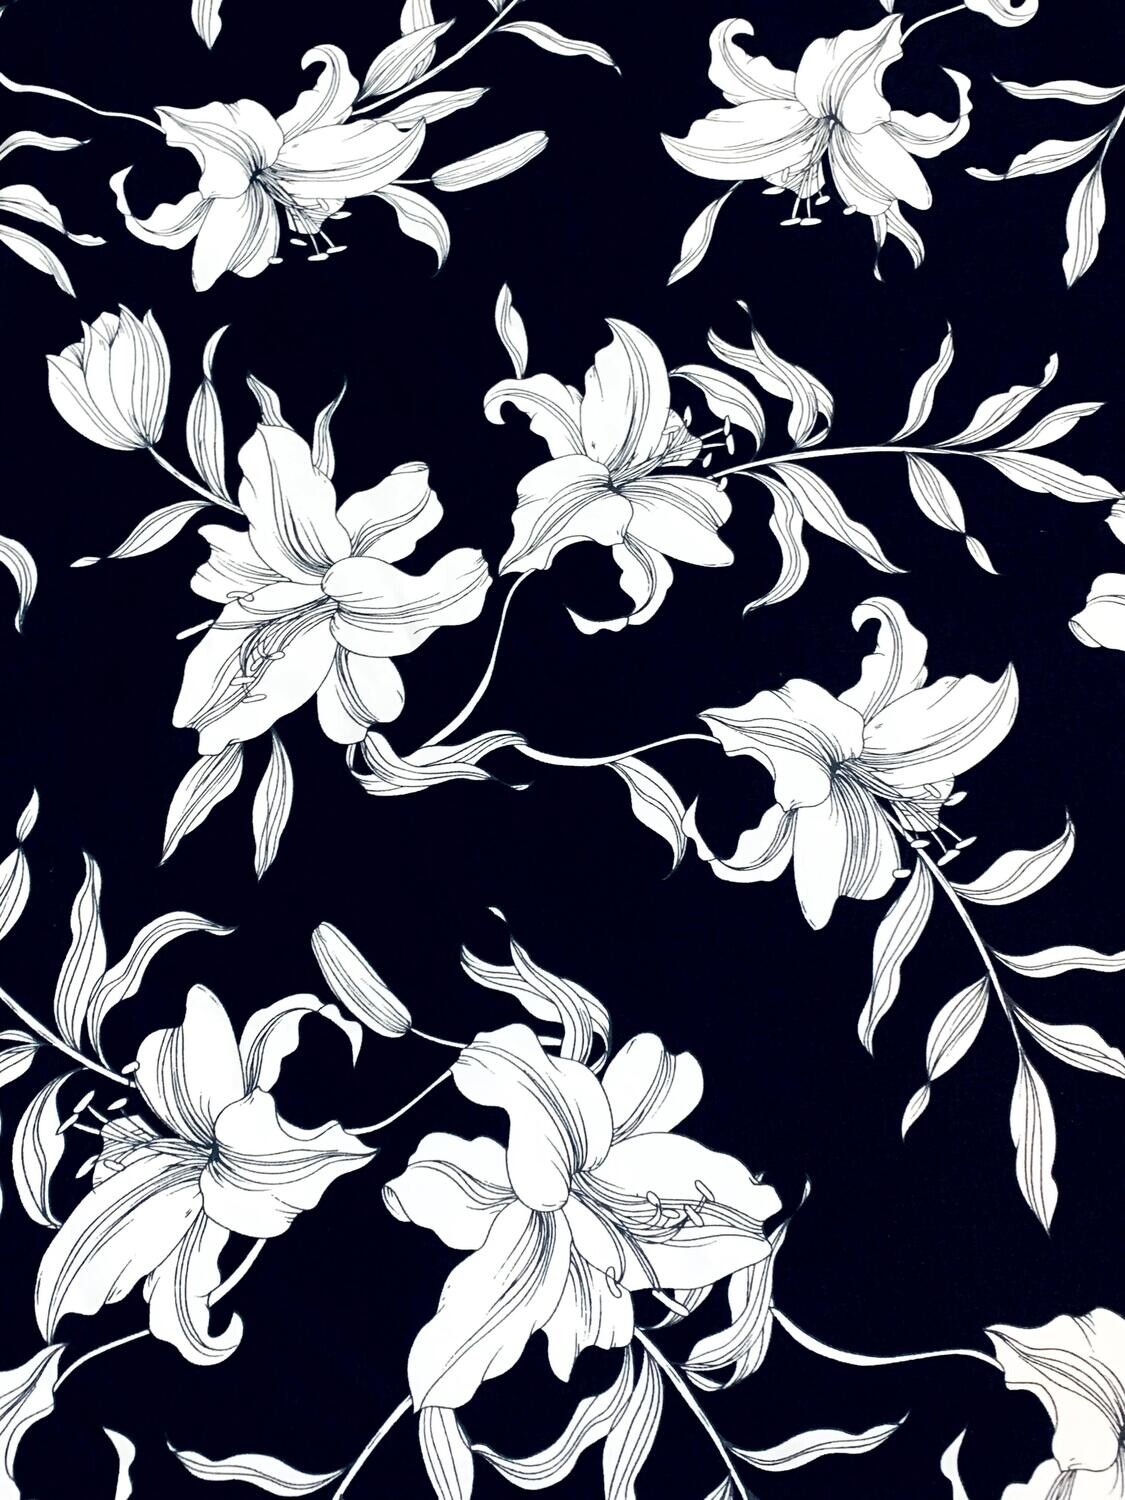 White Lilies on Black | Cotton Sateen | 145cm wide - 0.55m Piece